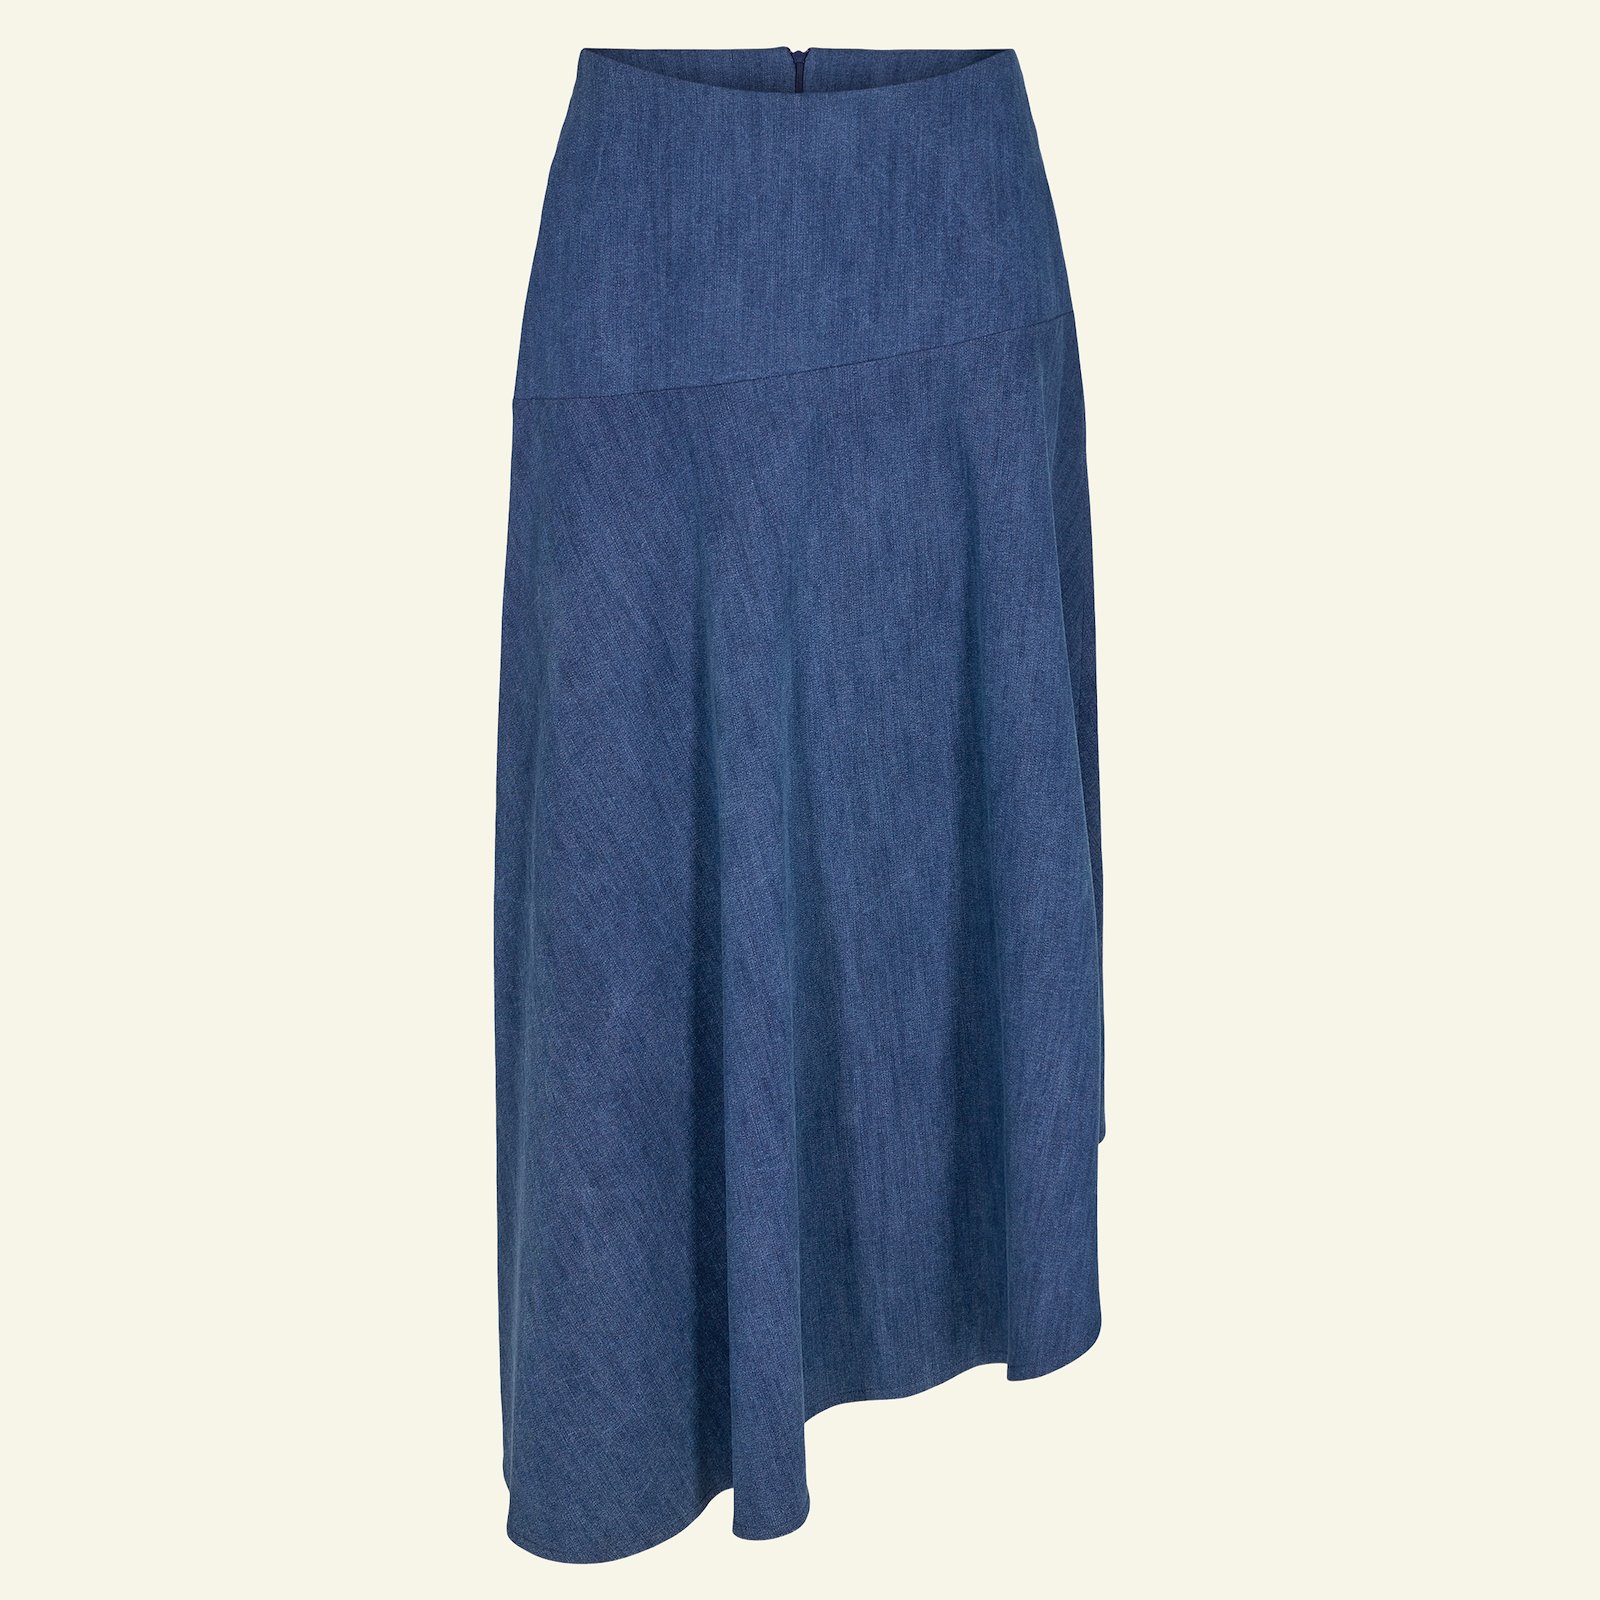 Asymmetric skirt, 44/16 p21041_460851_sskit